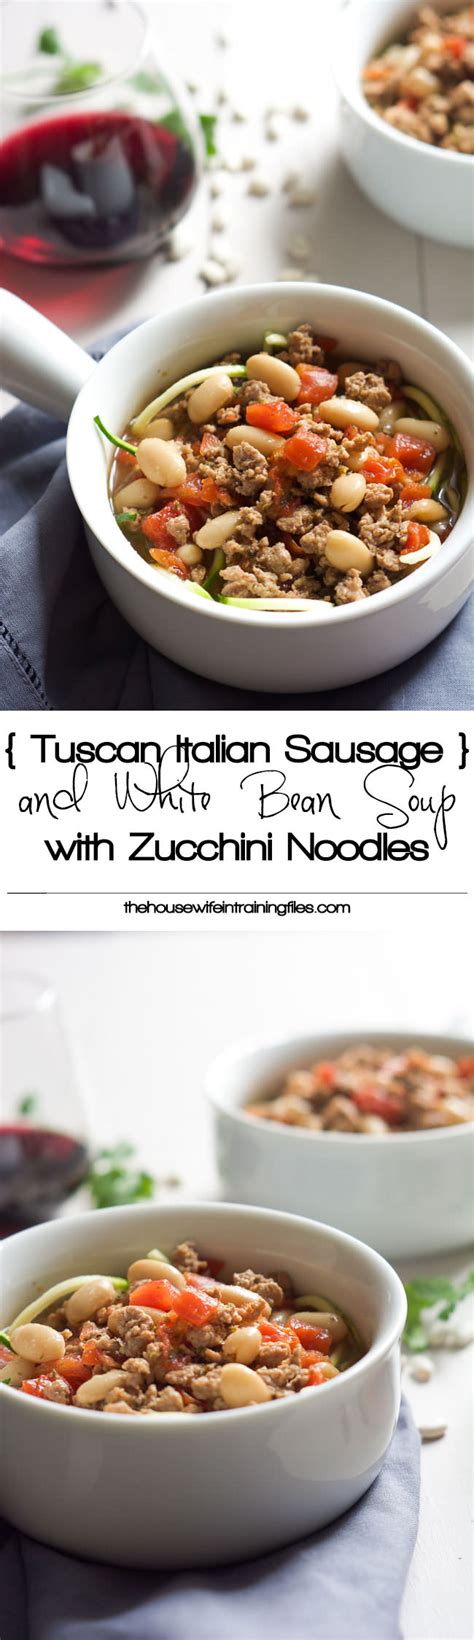 tuscan-italian-sausage-white-bean-soup-with-zucchini image